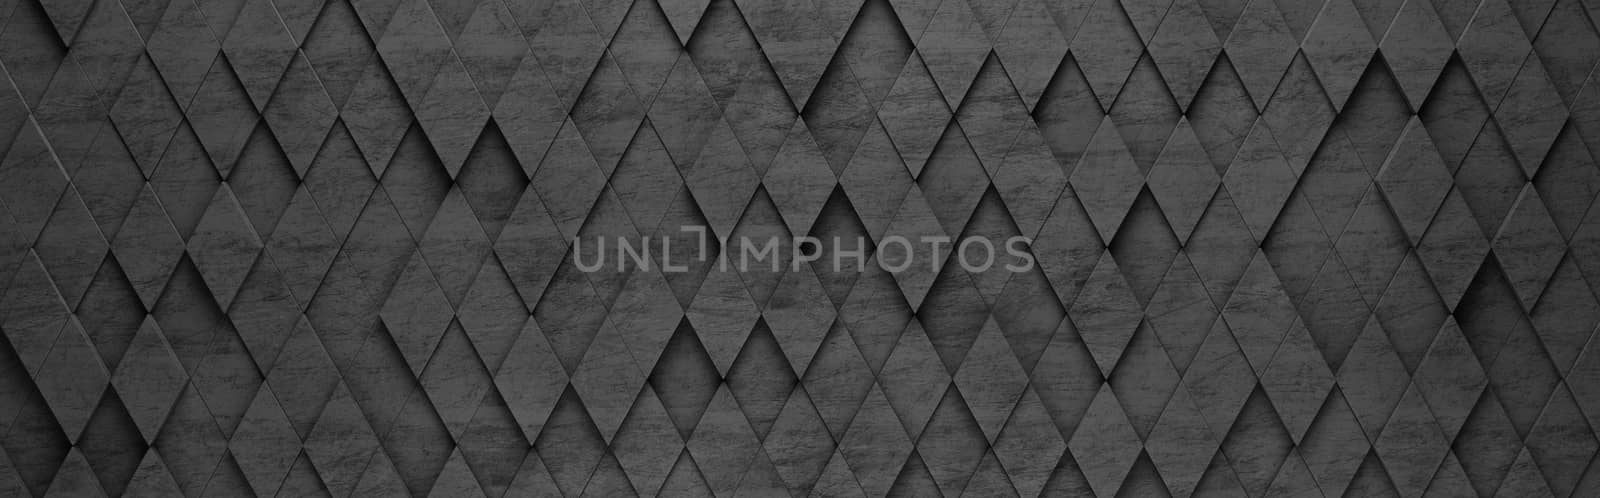 Black Rhombus 3D Pattern Background by make